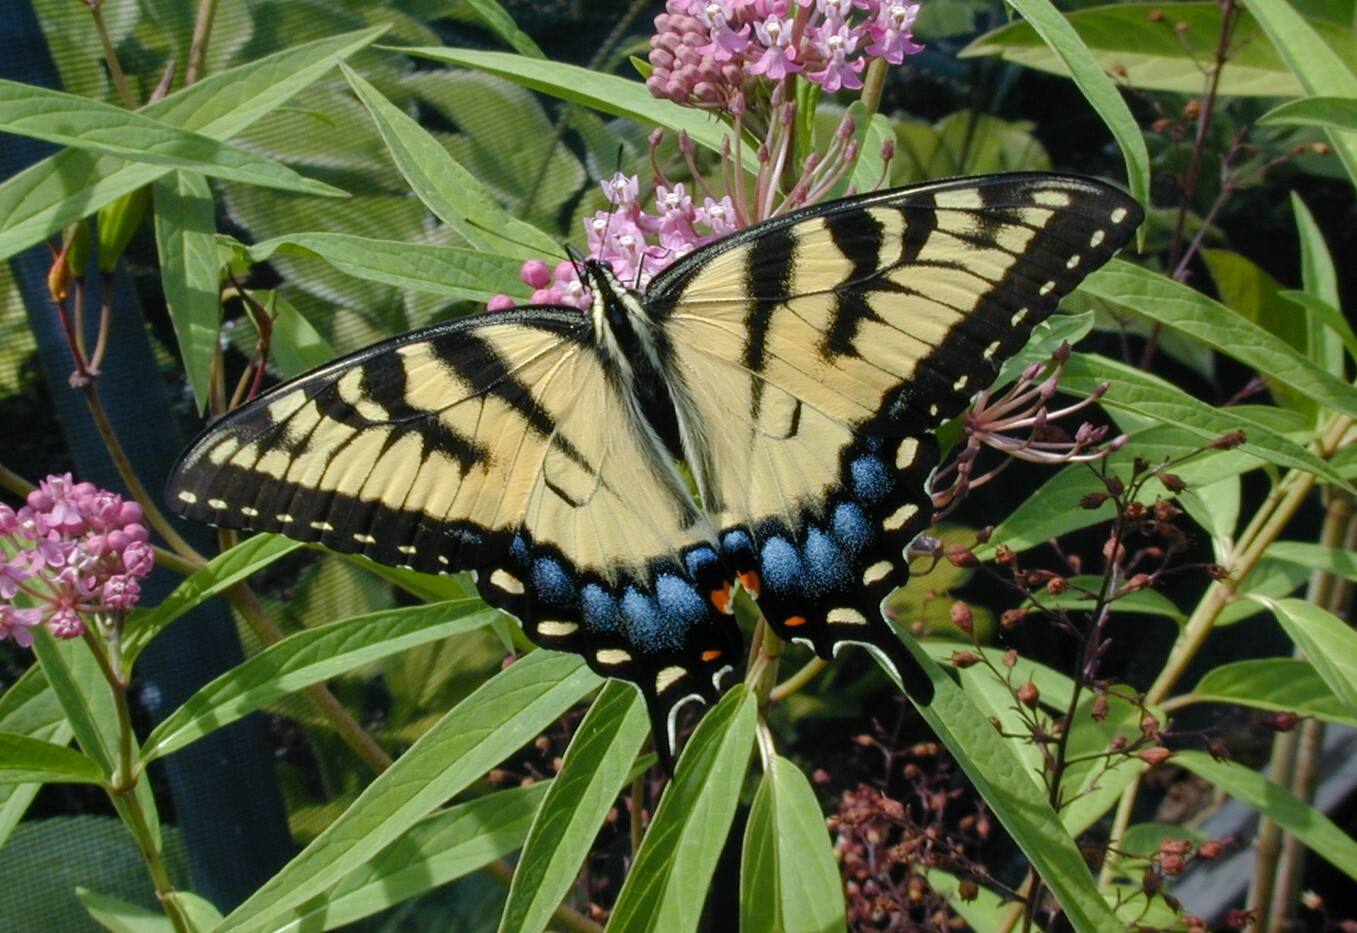 An eastern tiger swallowtail butterfly.